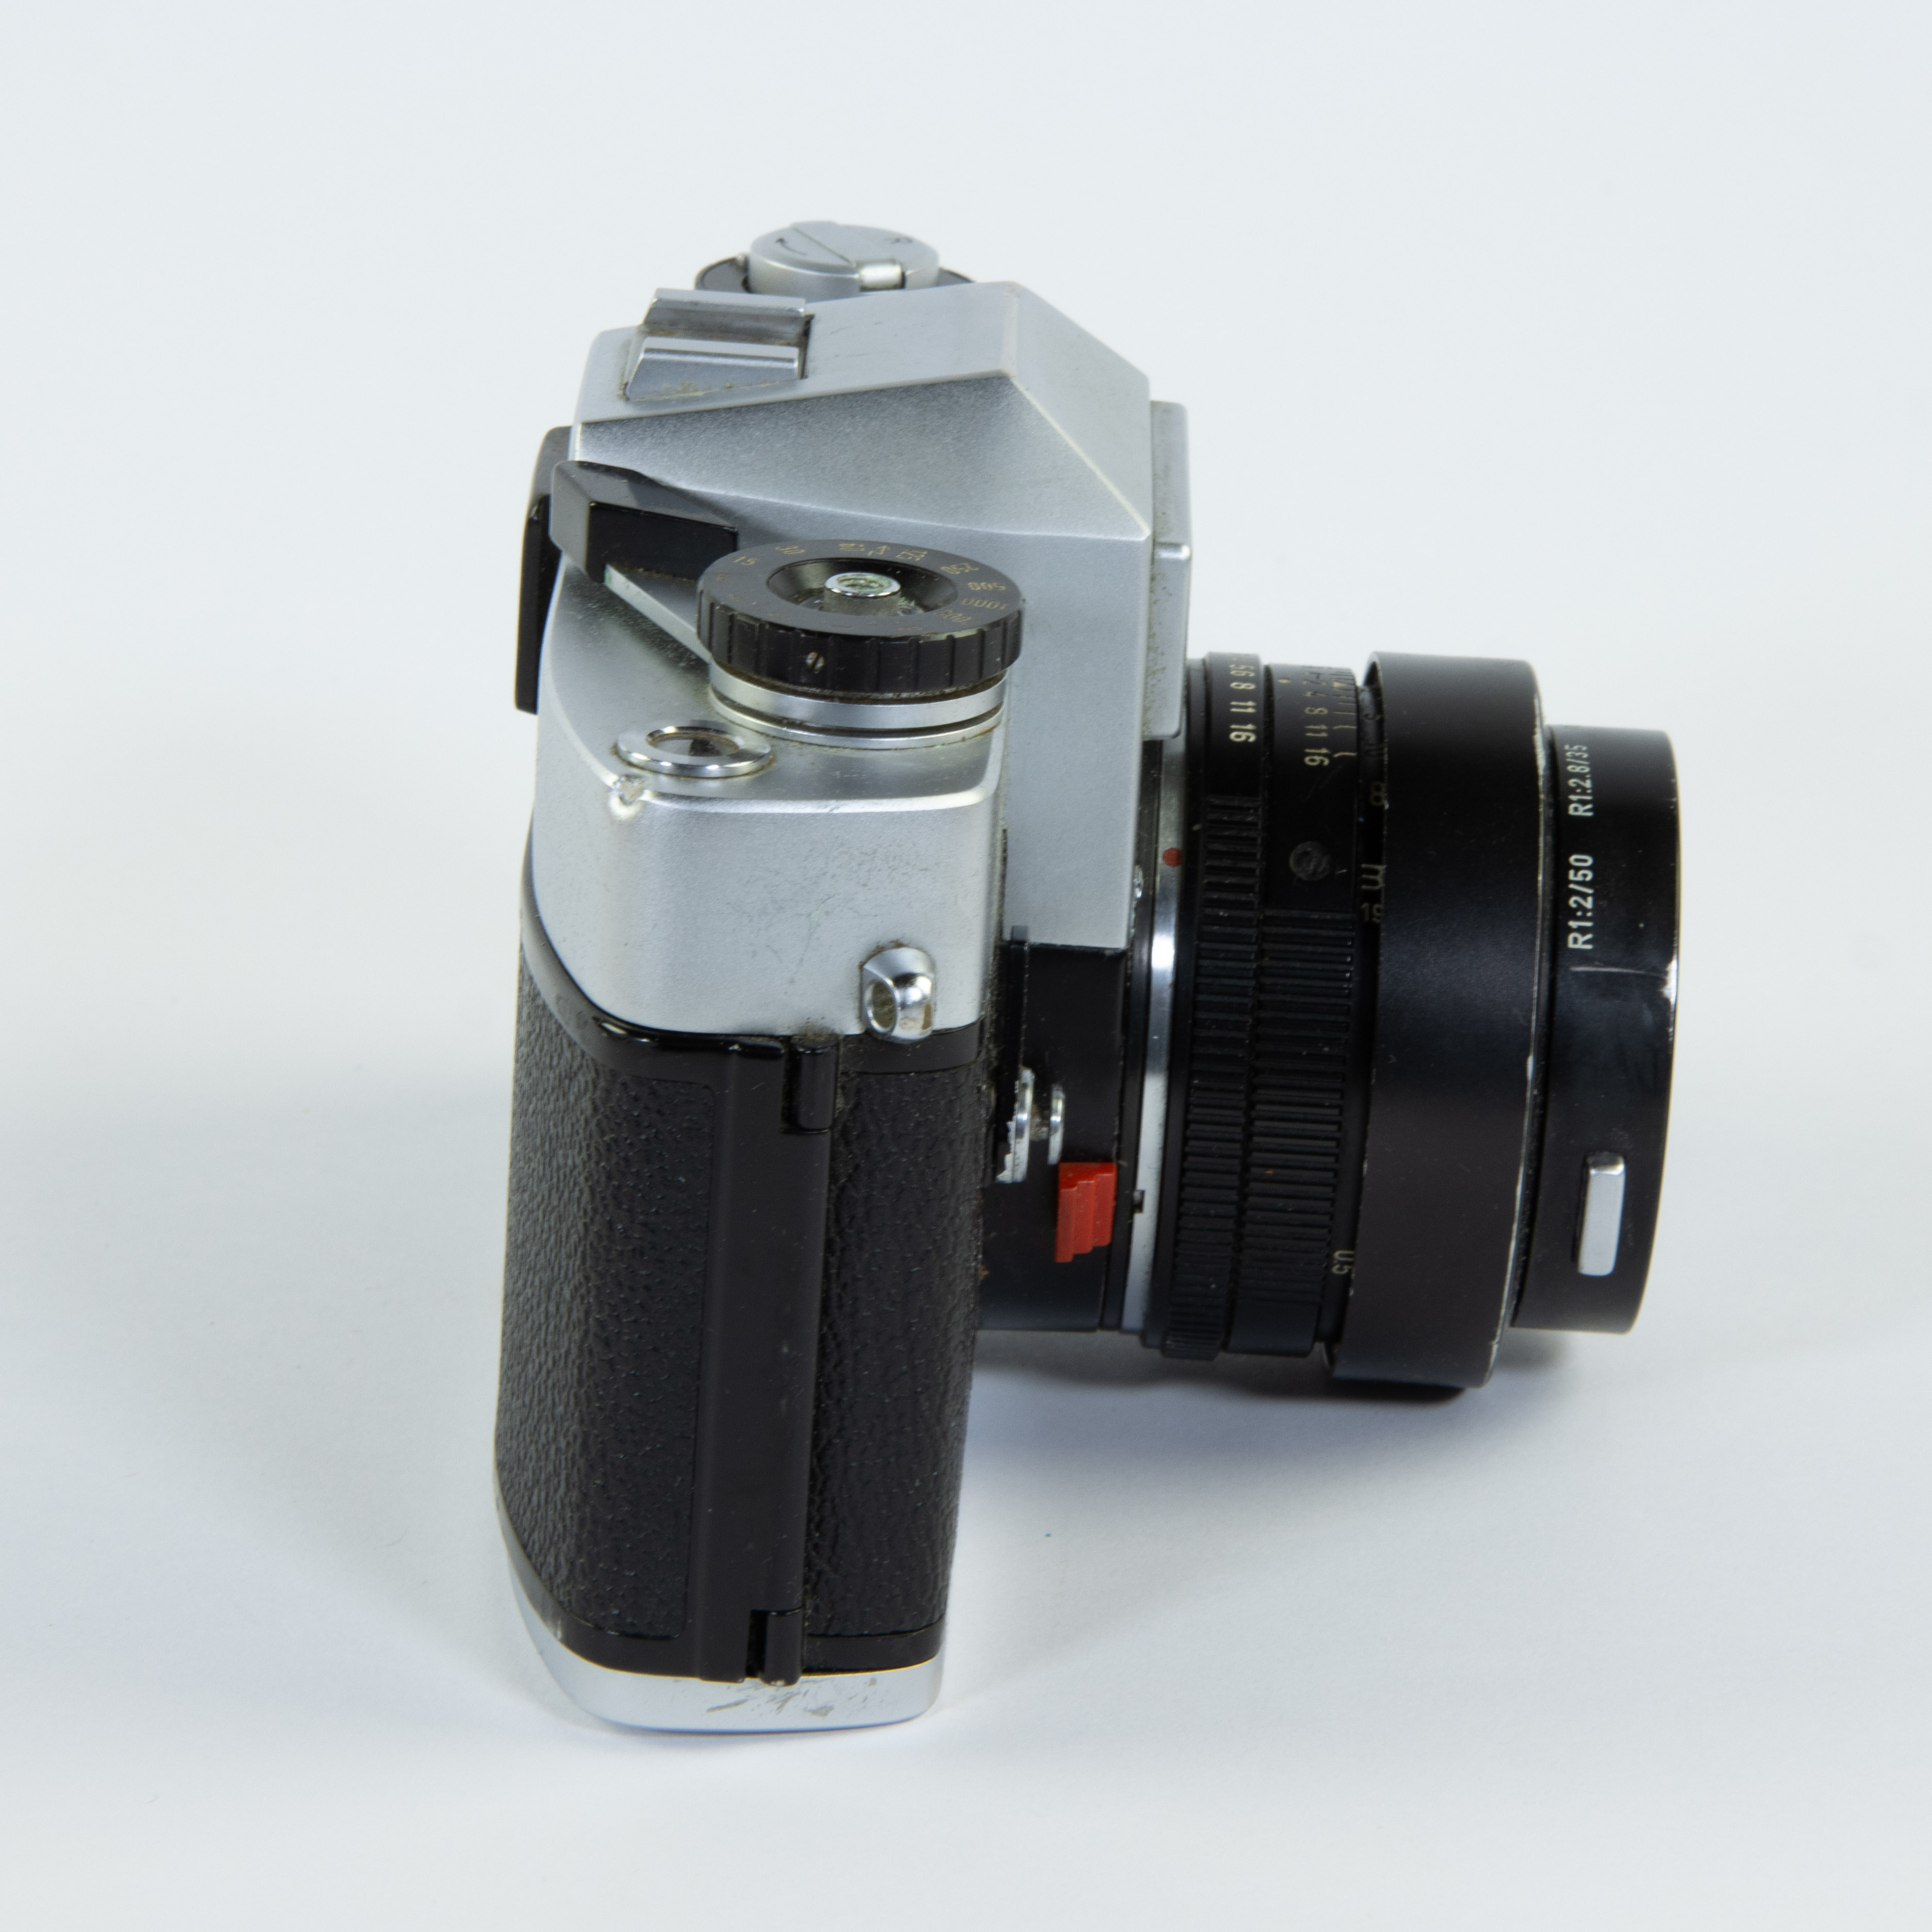 LEICAFLEX camera with accompanying telephoto lens - Image 6 of 11